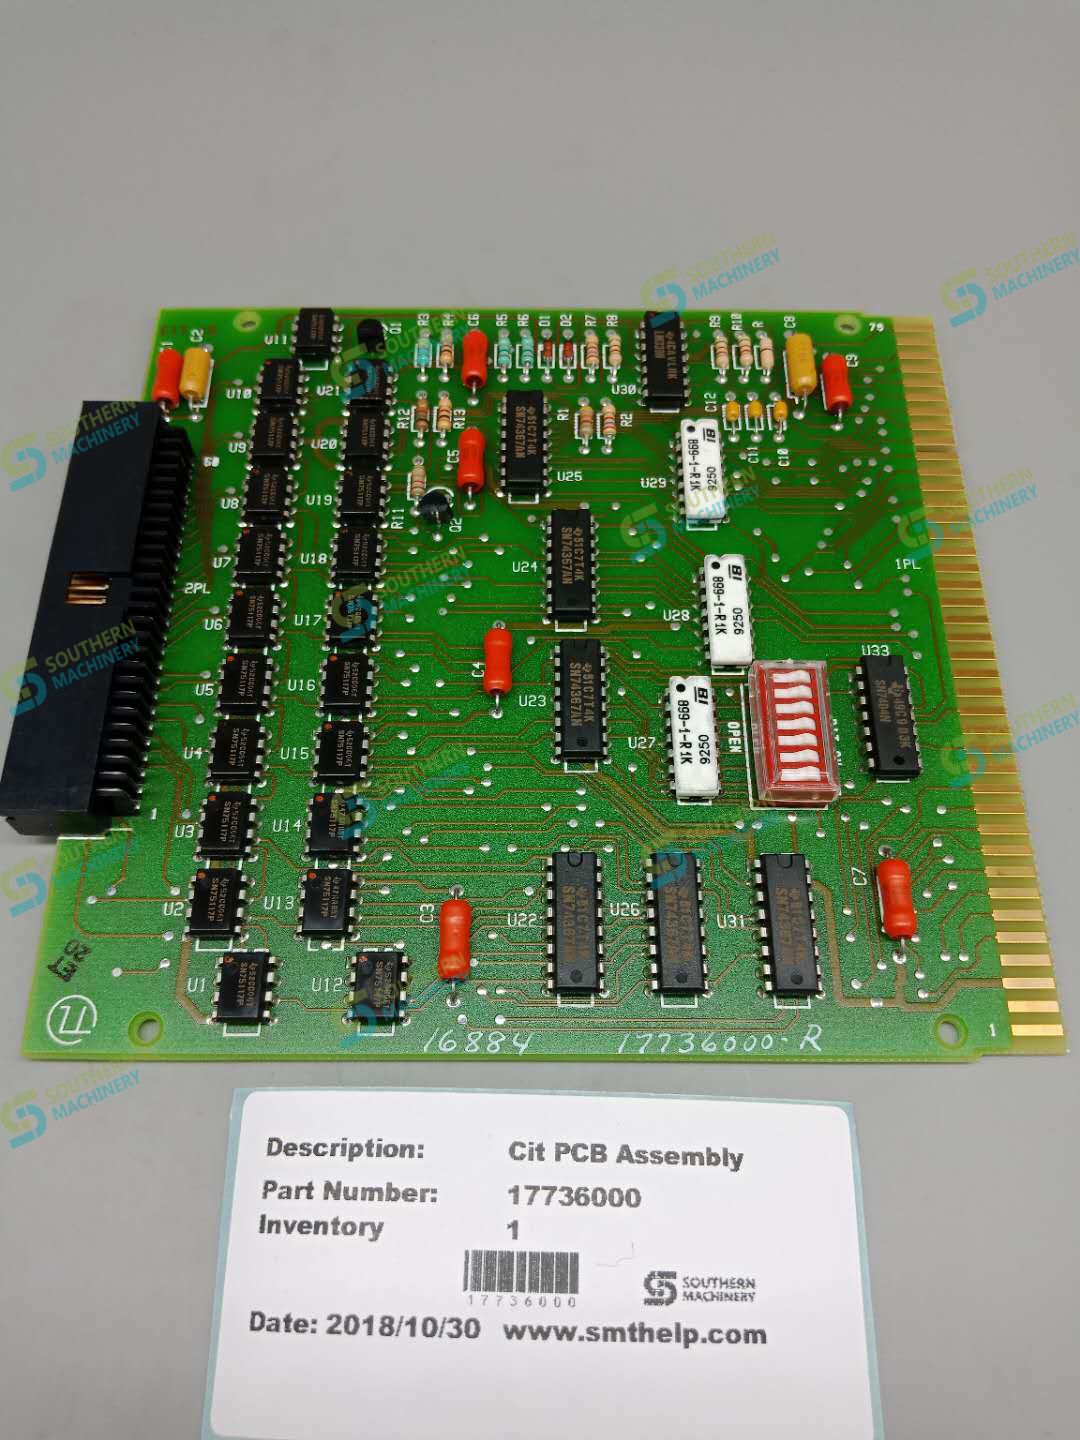  17736000 Cit PCB Assembly